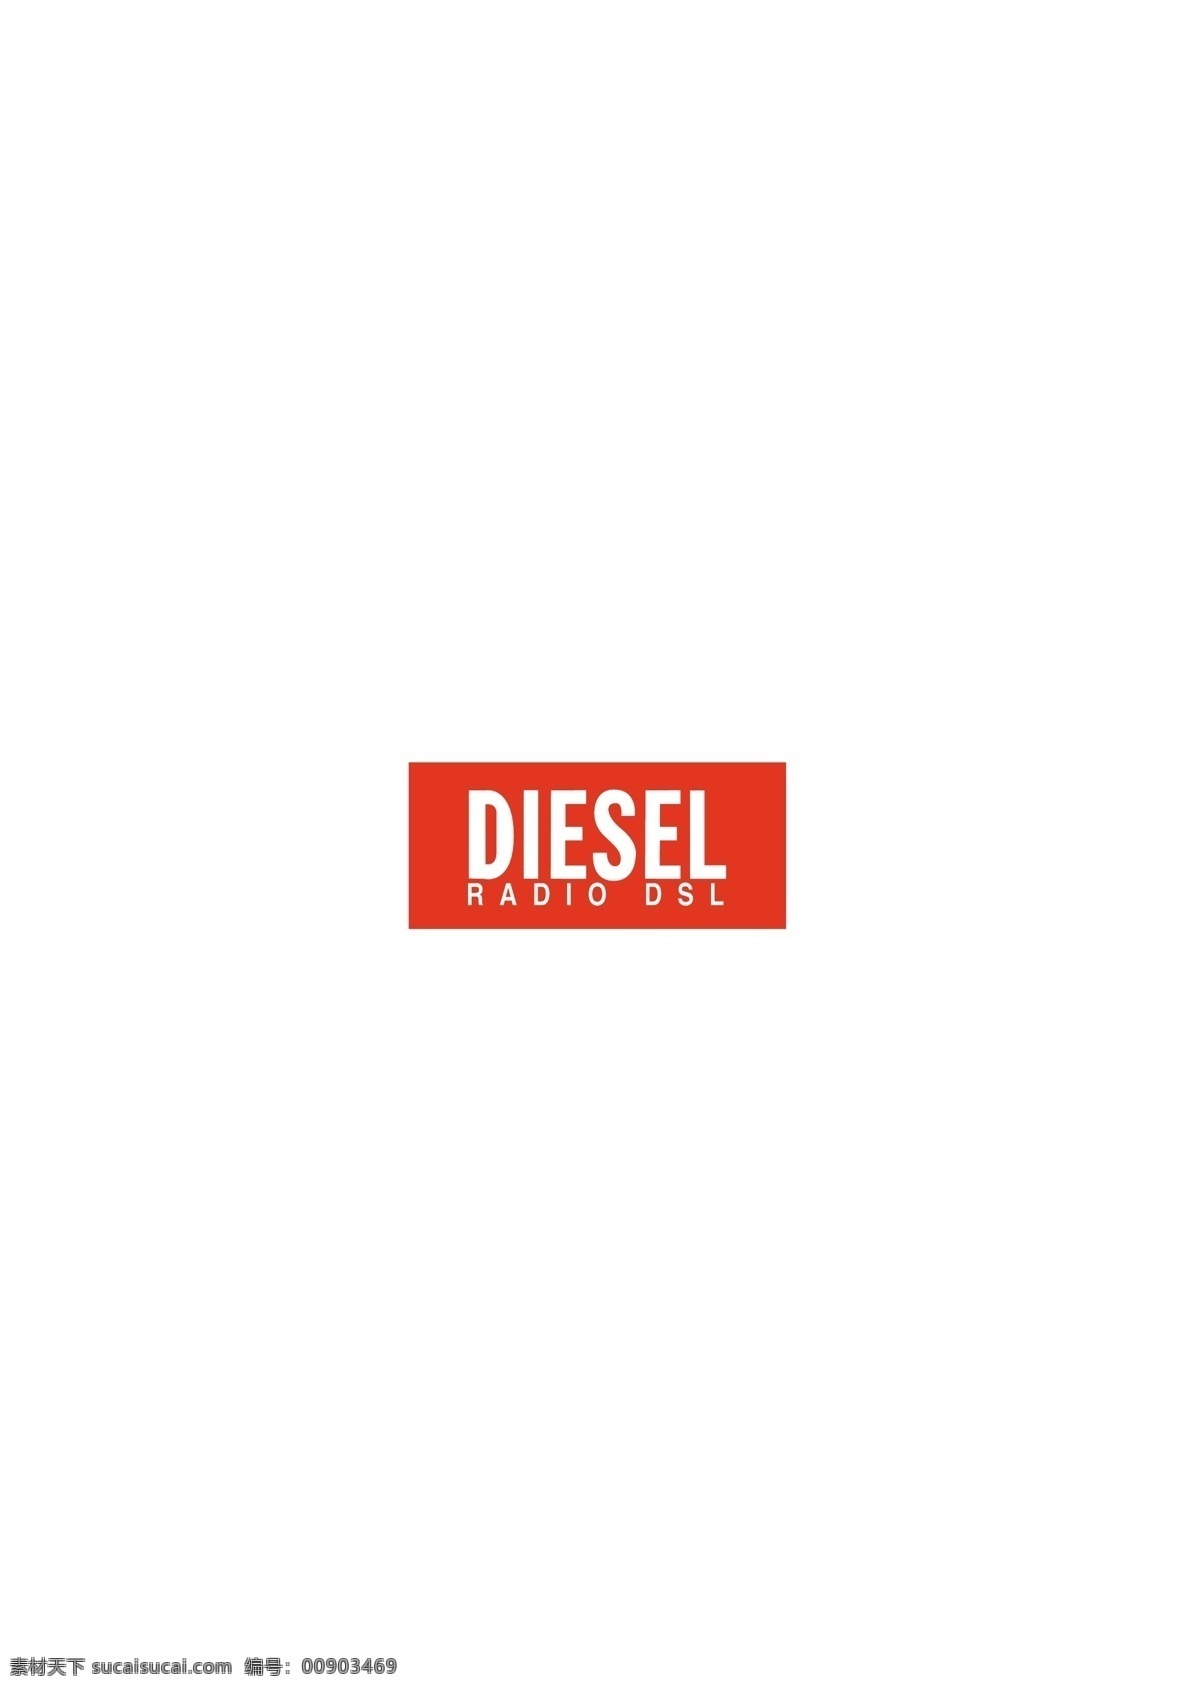 logo大全 logo 设计欣赏 商业矢量 矢量下载 diesel radio dsl 标志设计 欣赏 网页矢量 矢量图 其他矢量图